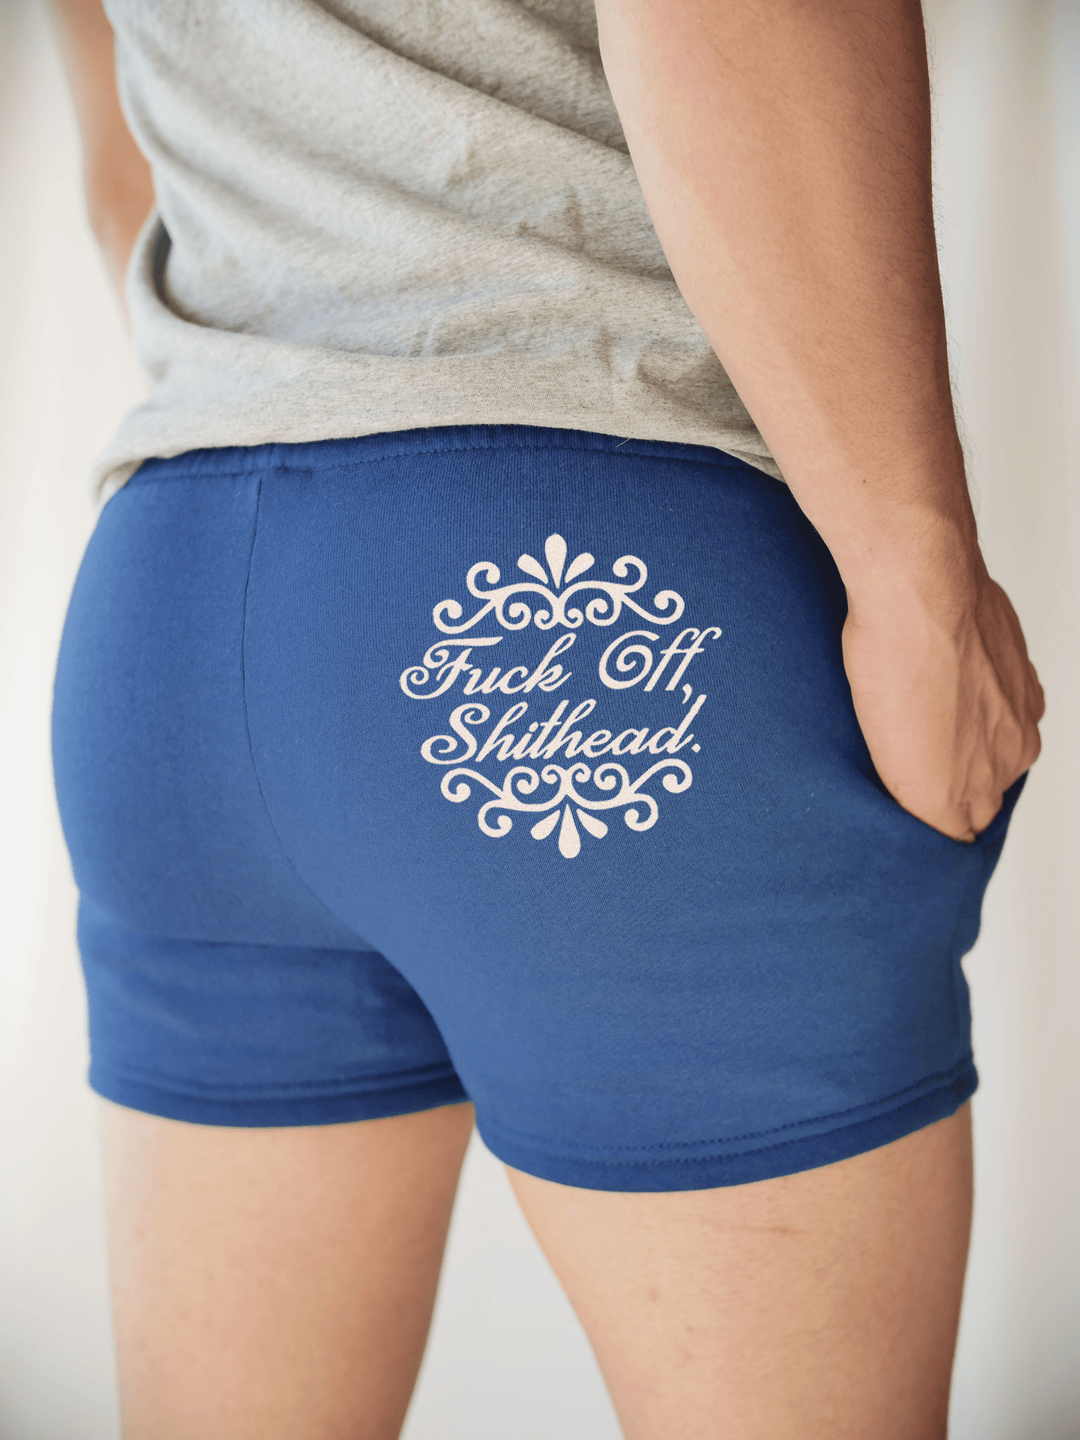 PixelThat Punderwear Shorts Royal Blue / S / Back F*ck Off Sh*thead Men's Gym Shorts